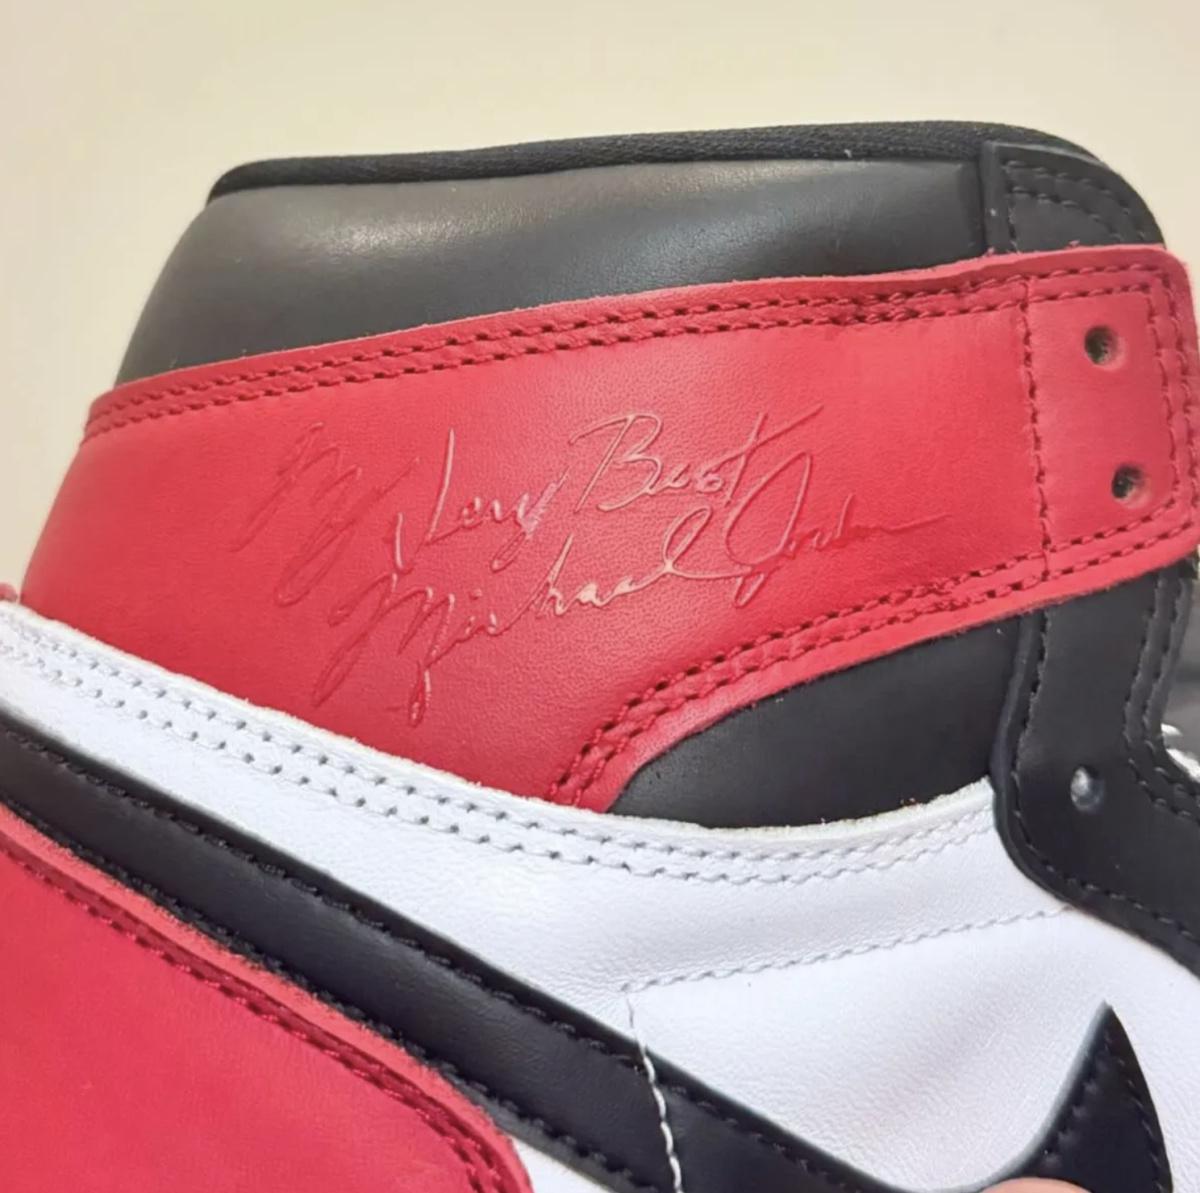 Premier regard sur l'Air Jordan 1 "Black Toe Reimagined"